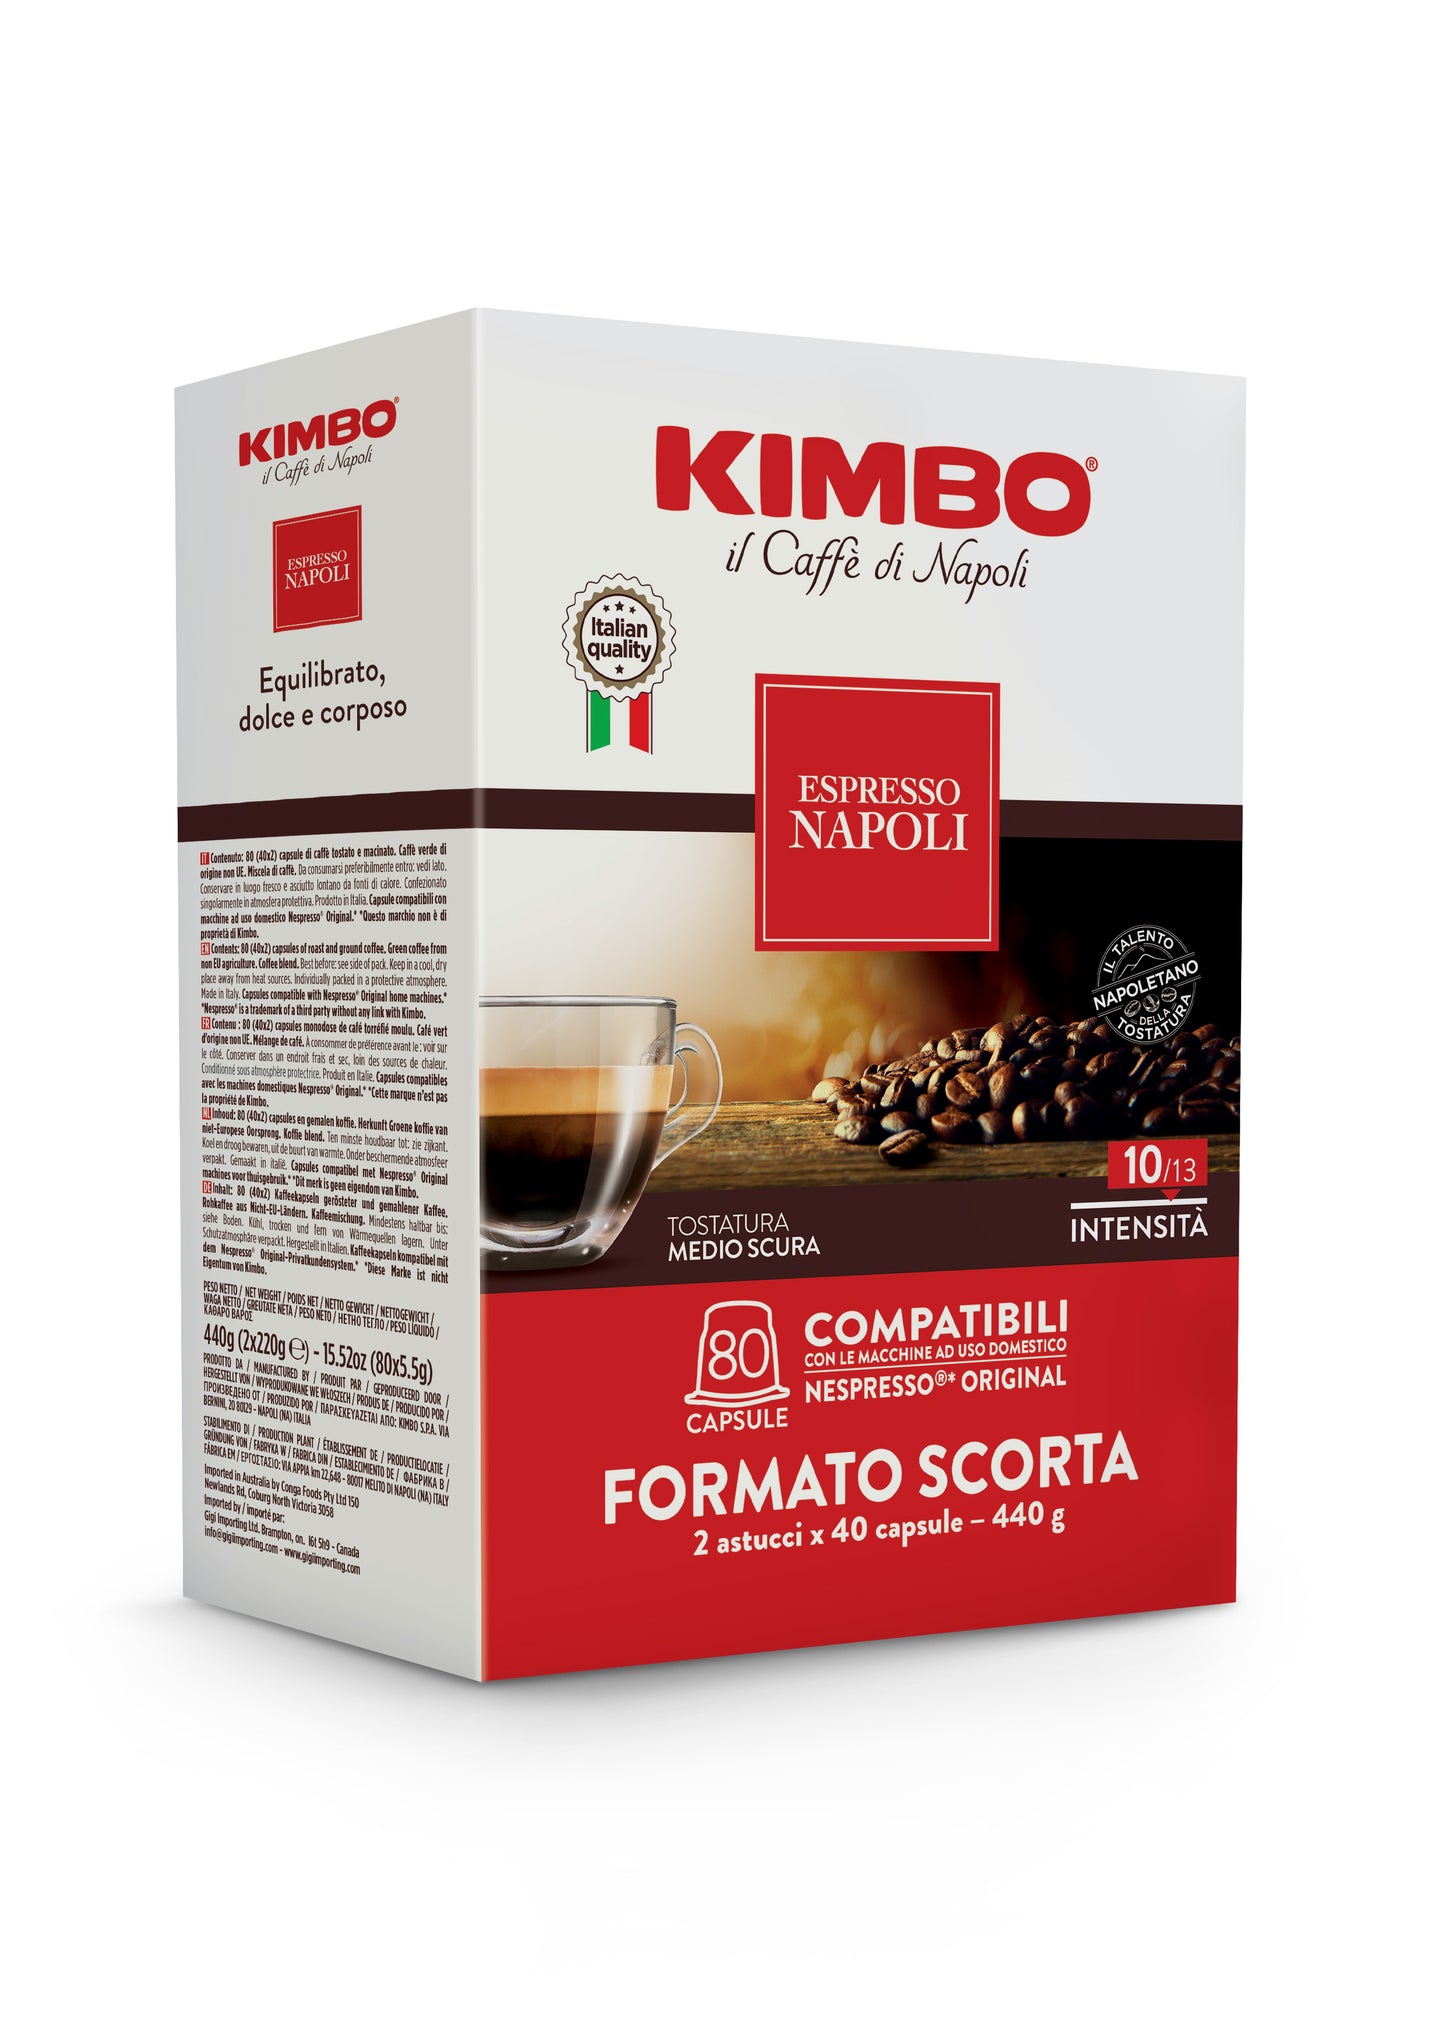 
                  
                    Kimbo Espresso Napoli 80 capsule compatibili nespresso original
                  
                